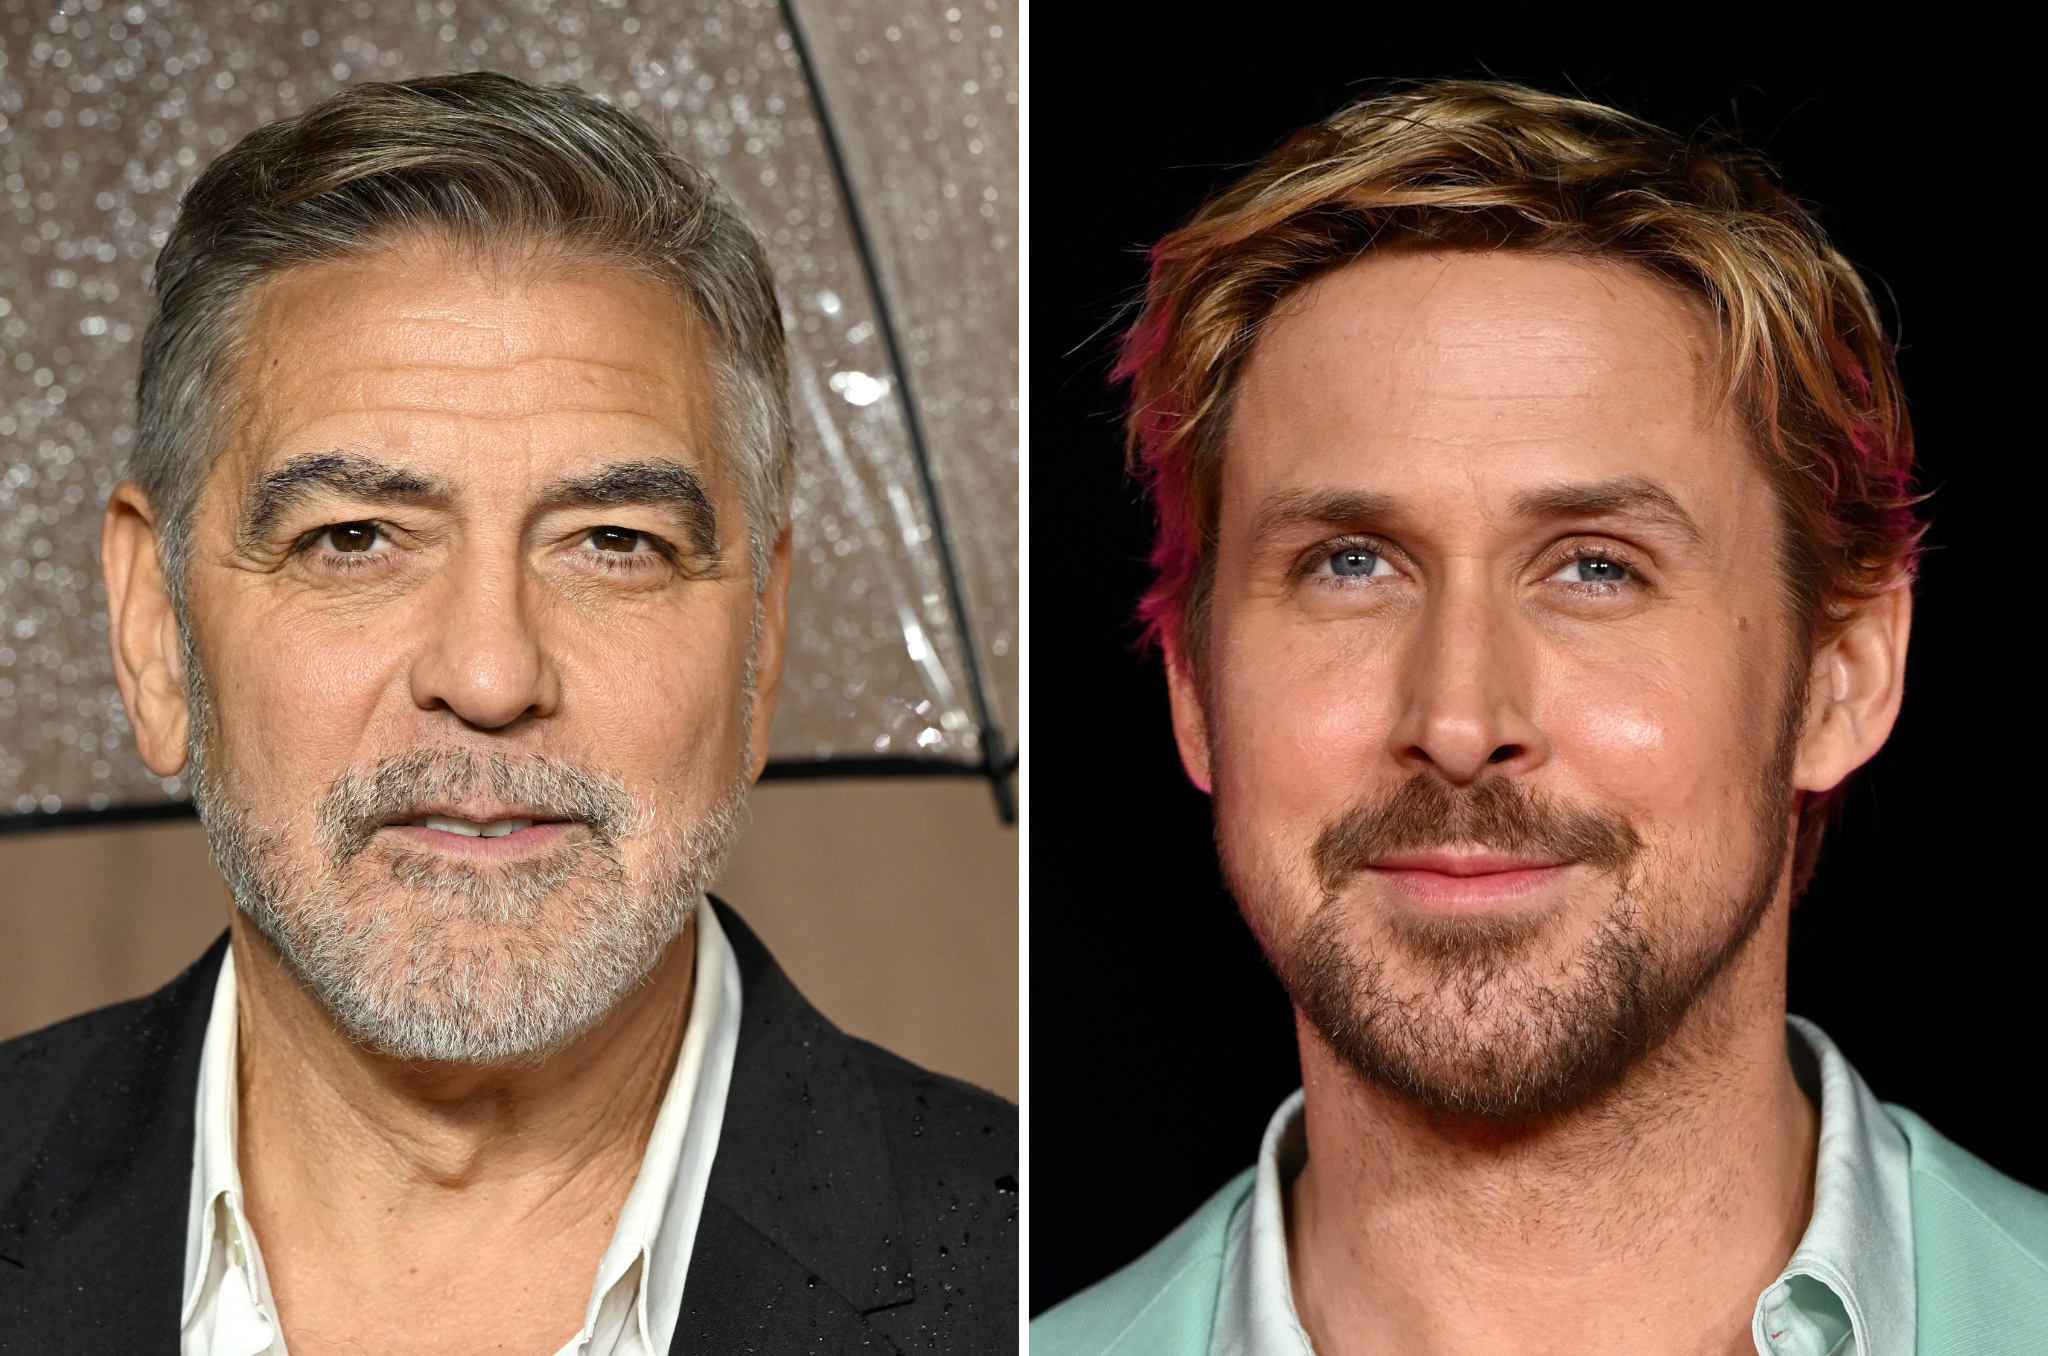 George Clooney and Ryan Gosling